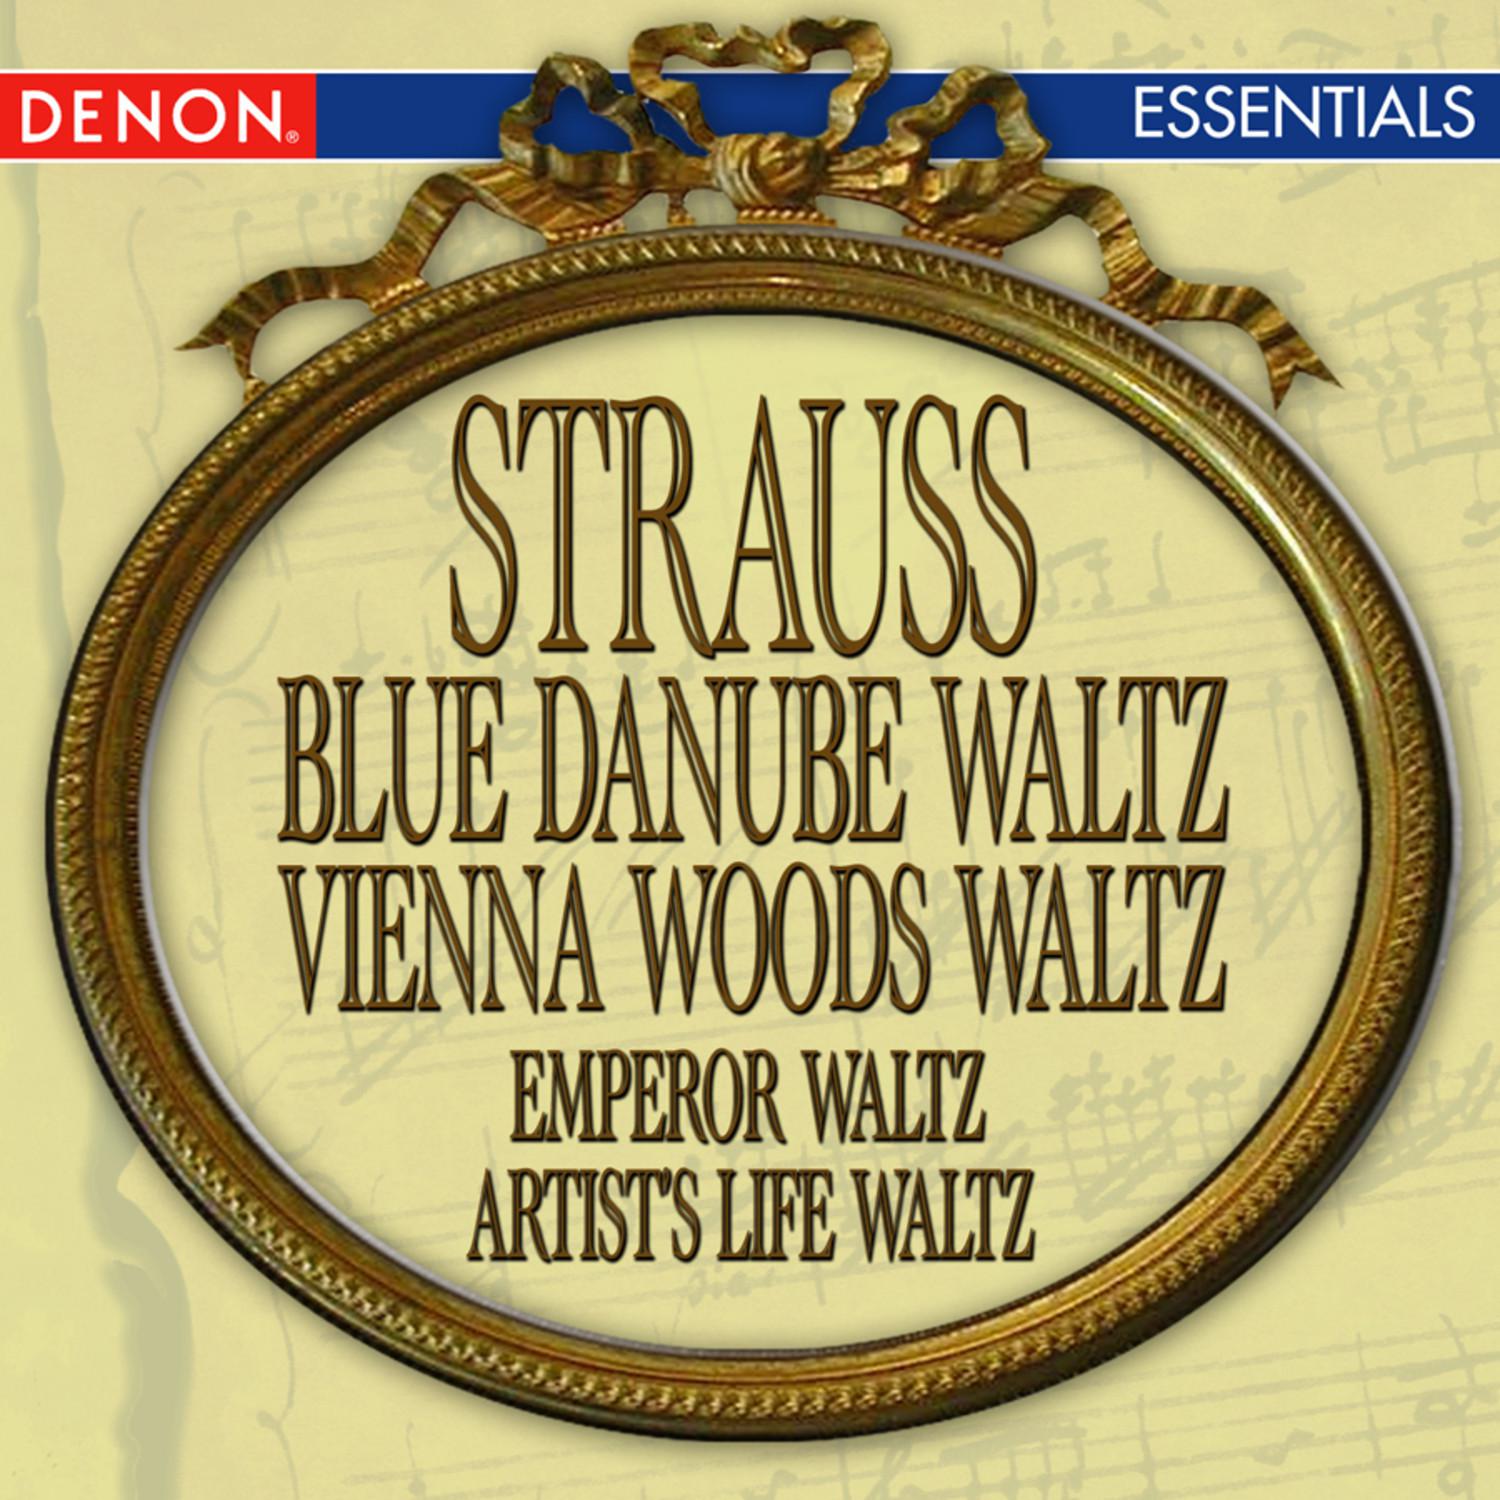 The Vienna Woods Waltz, Op. 325